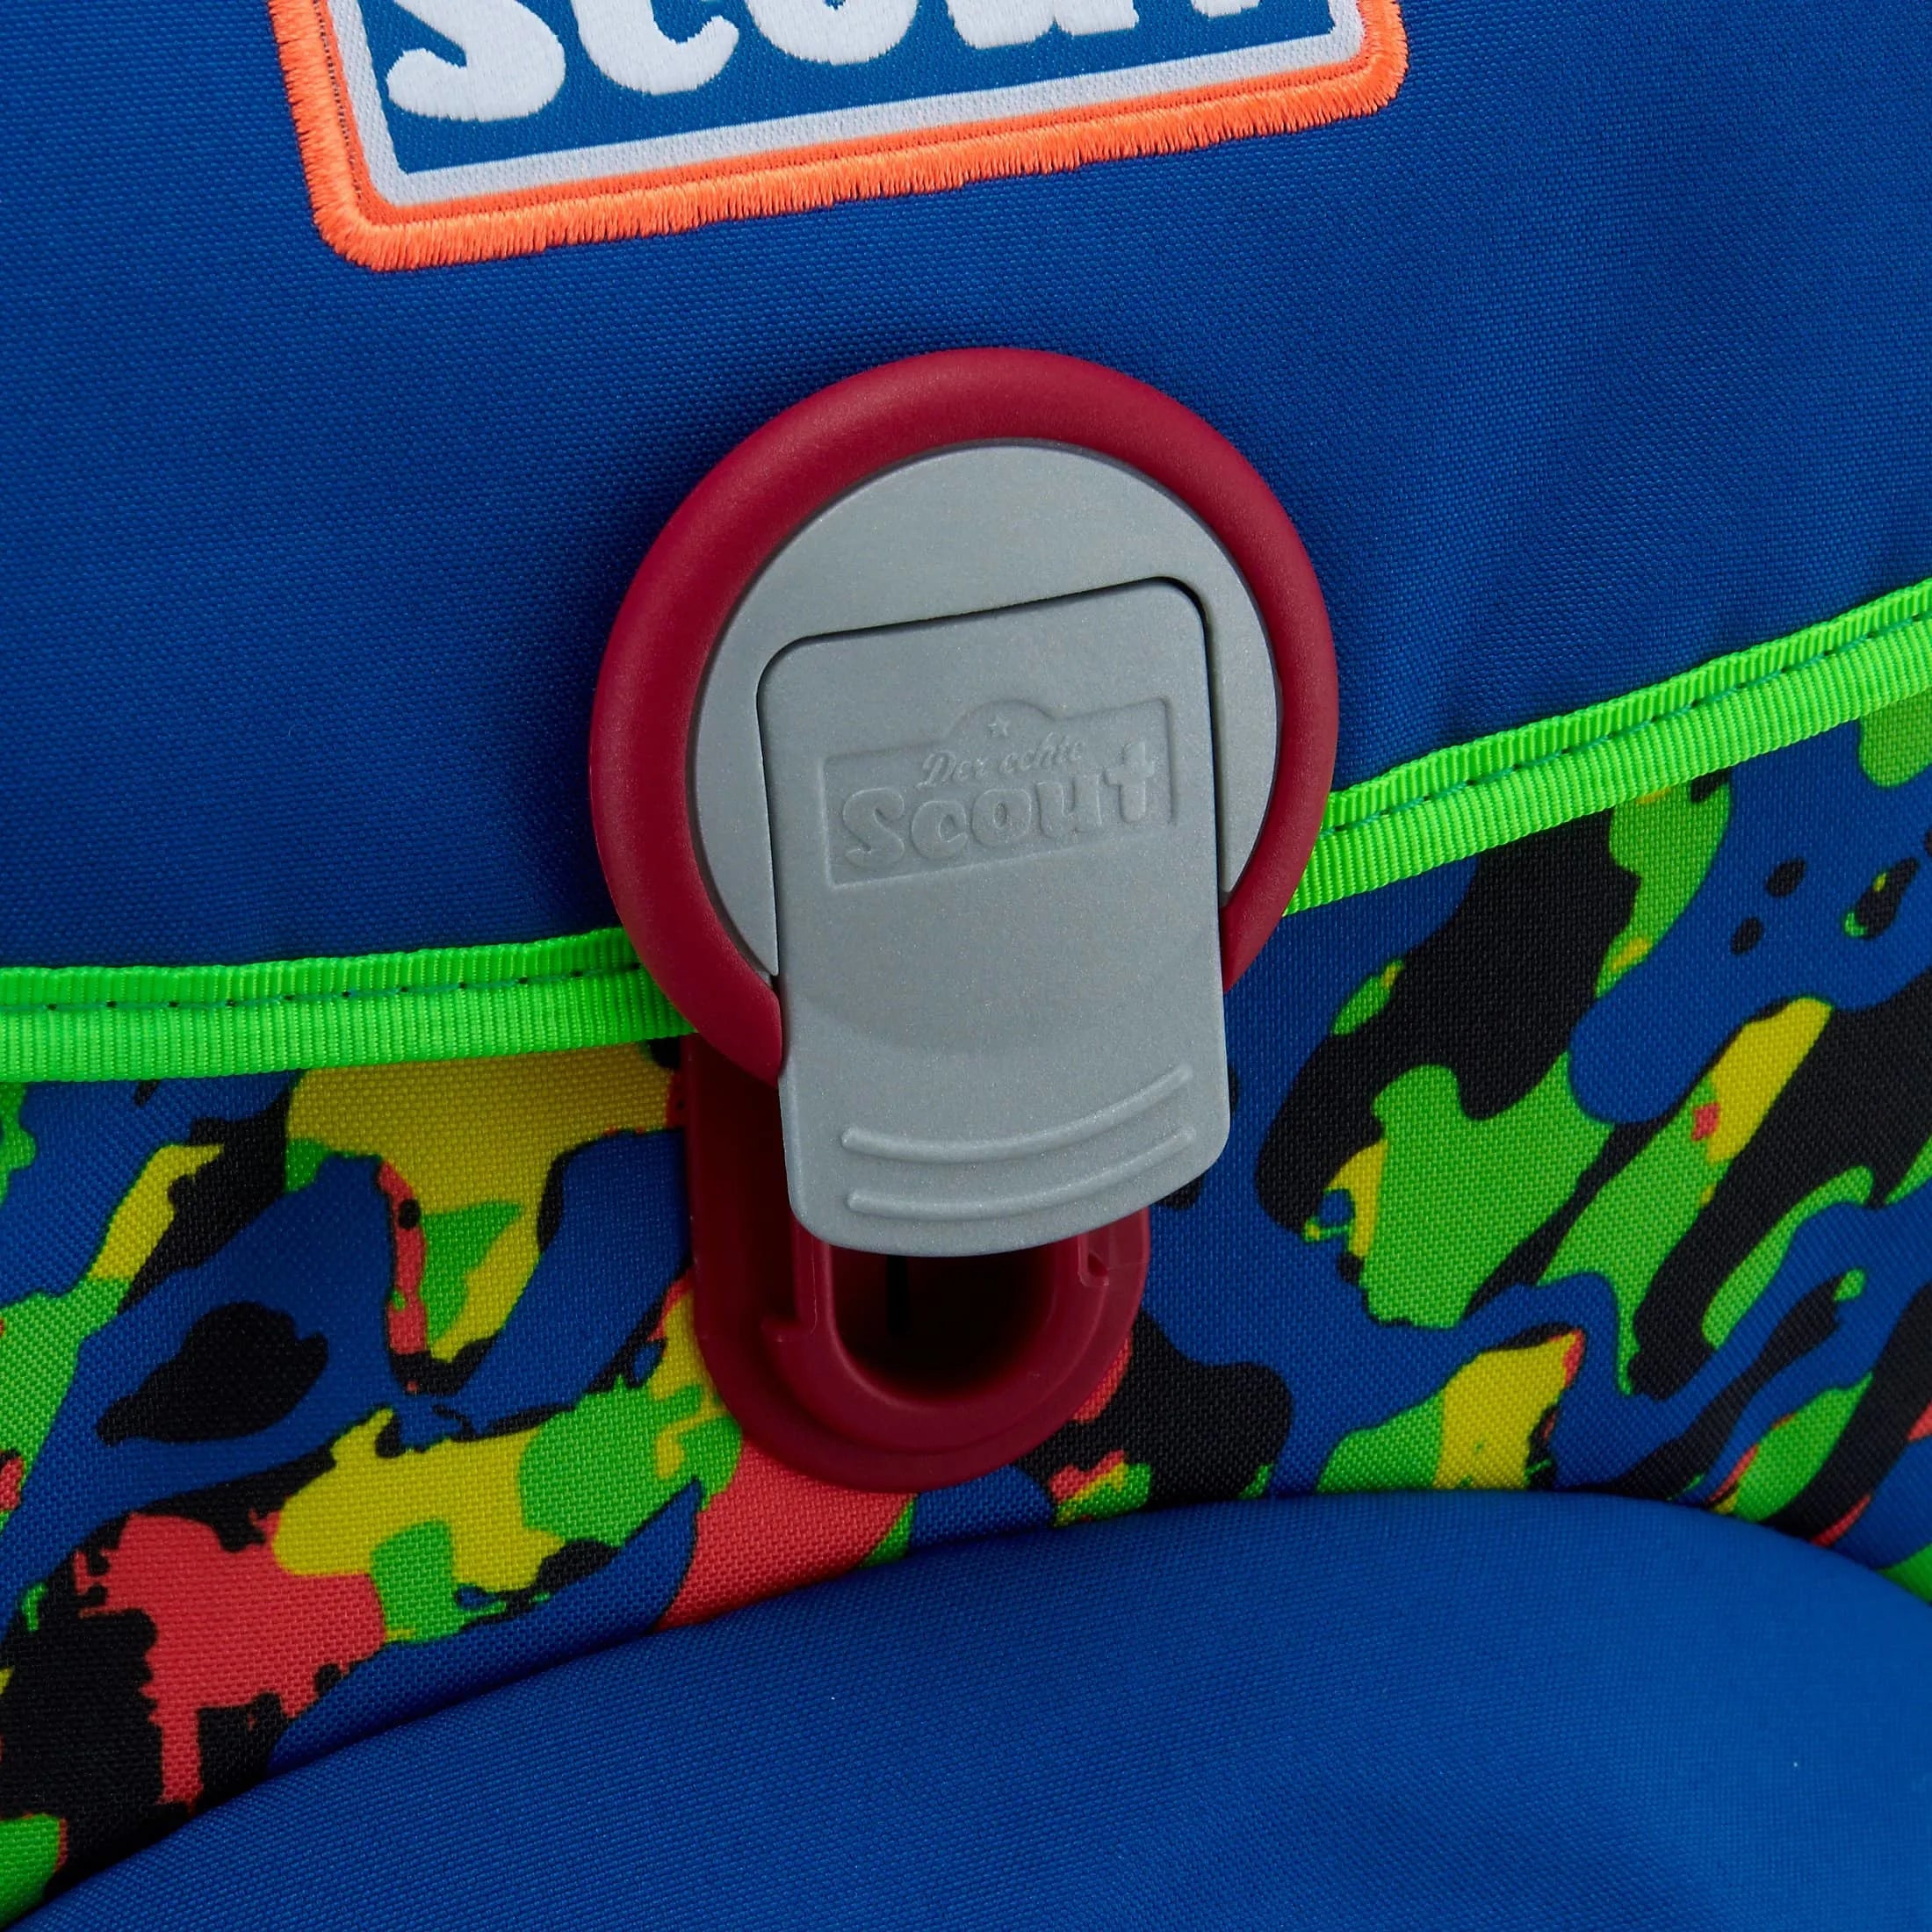 Scout Alpha Limited Edition 4-piece satchel set - snaps-mermaid